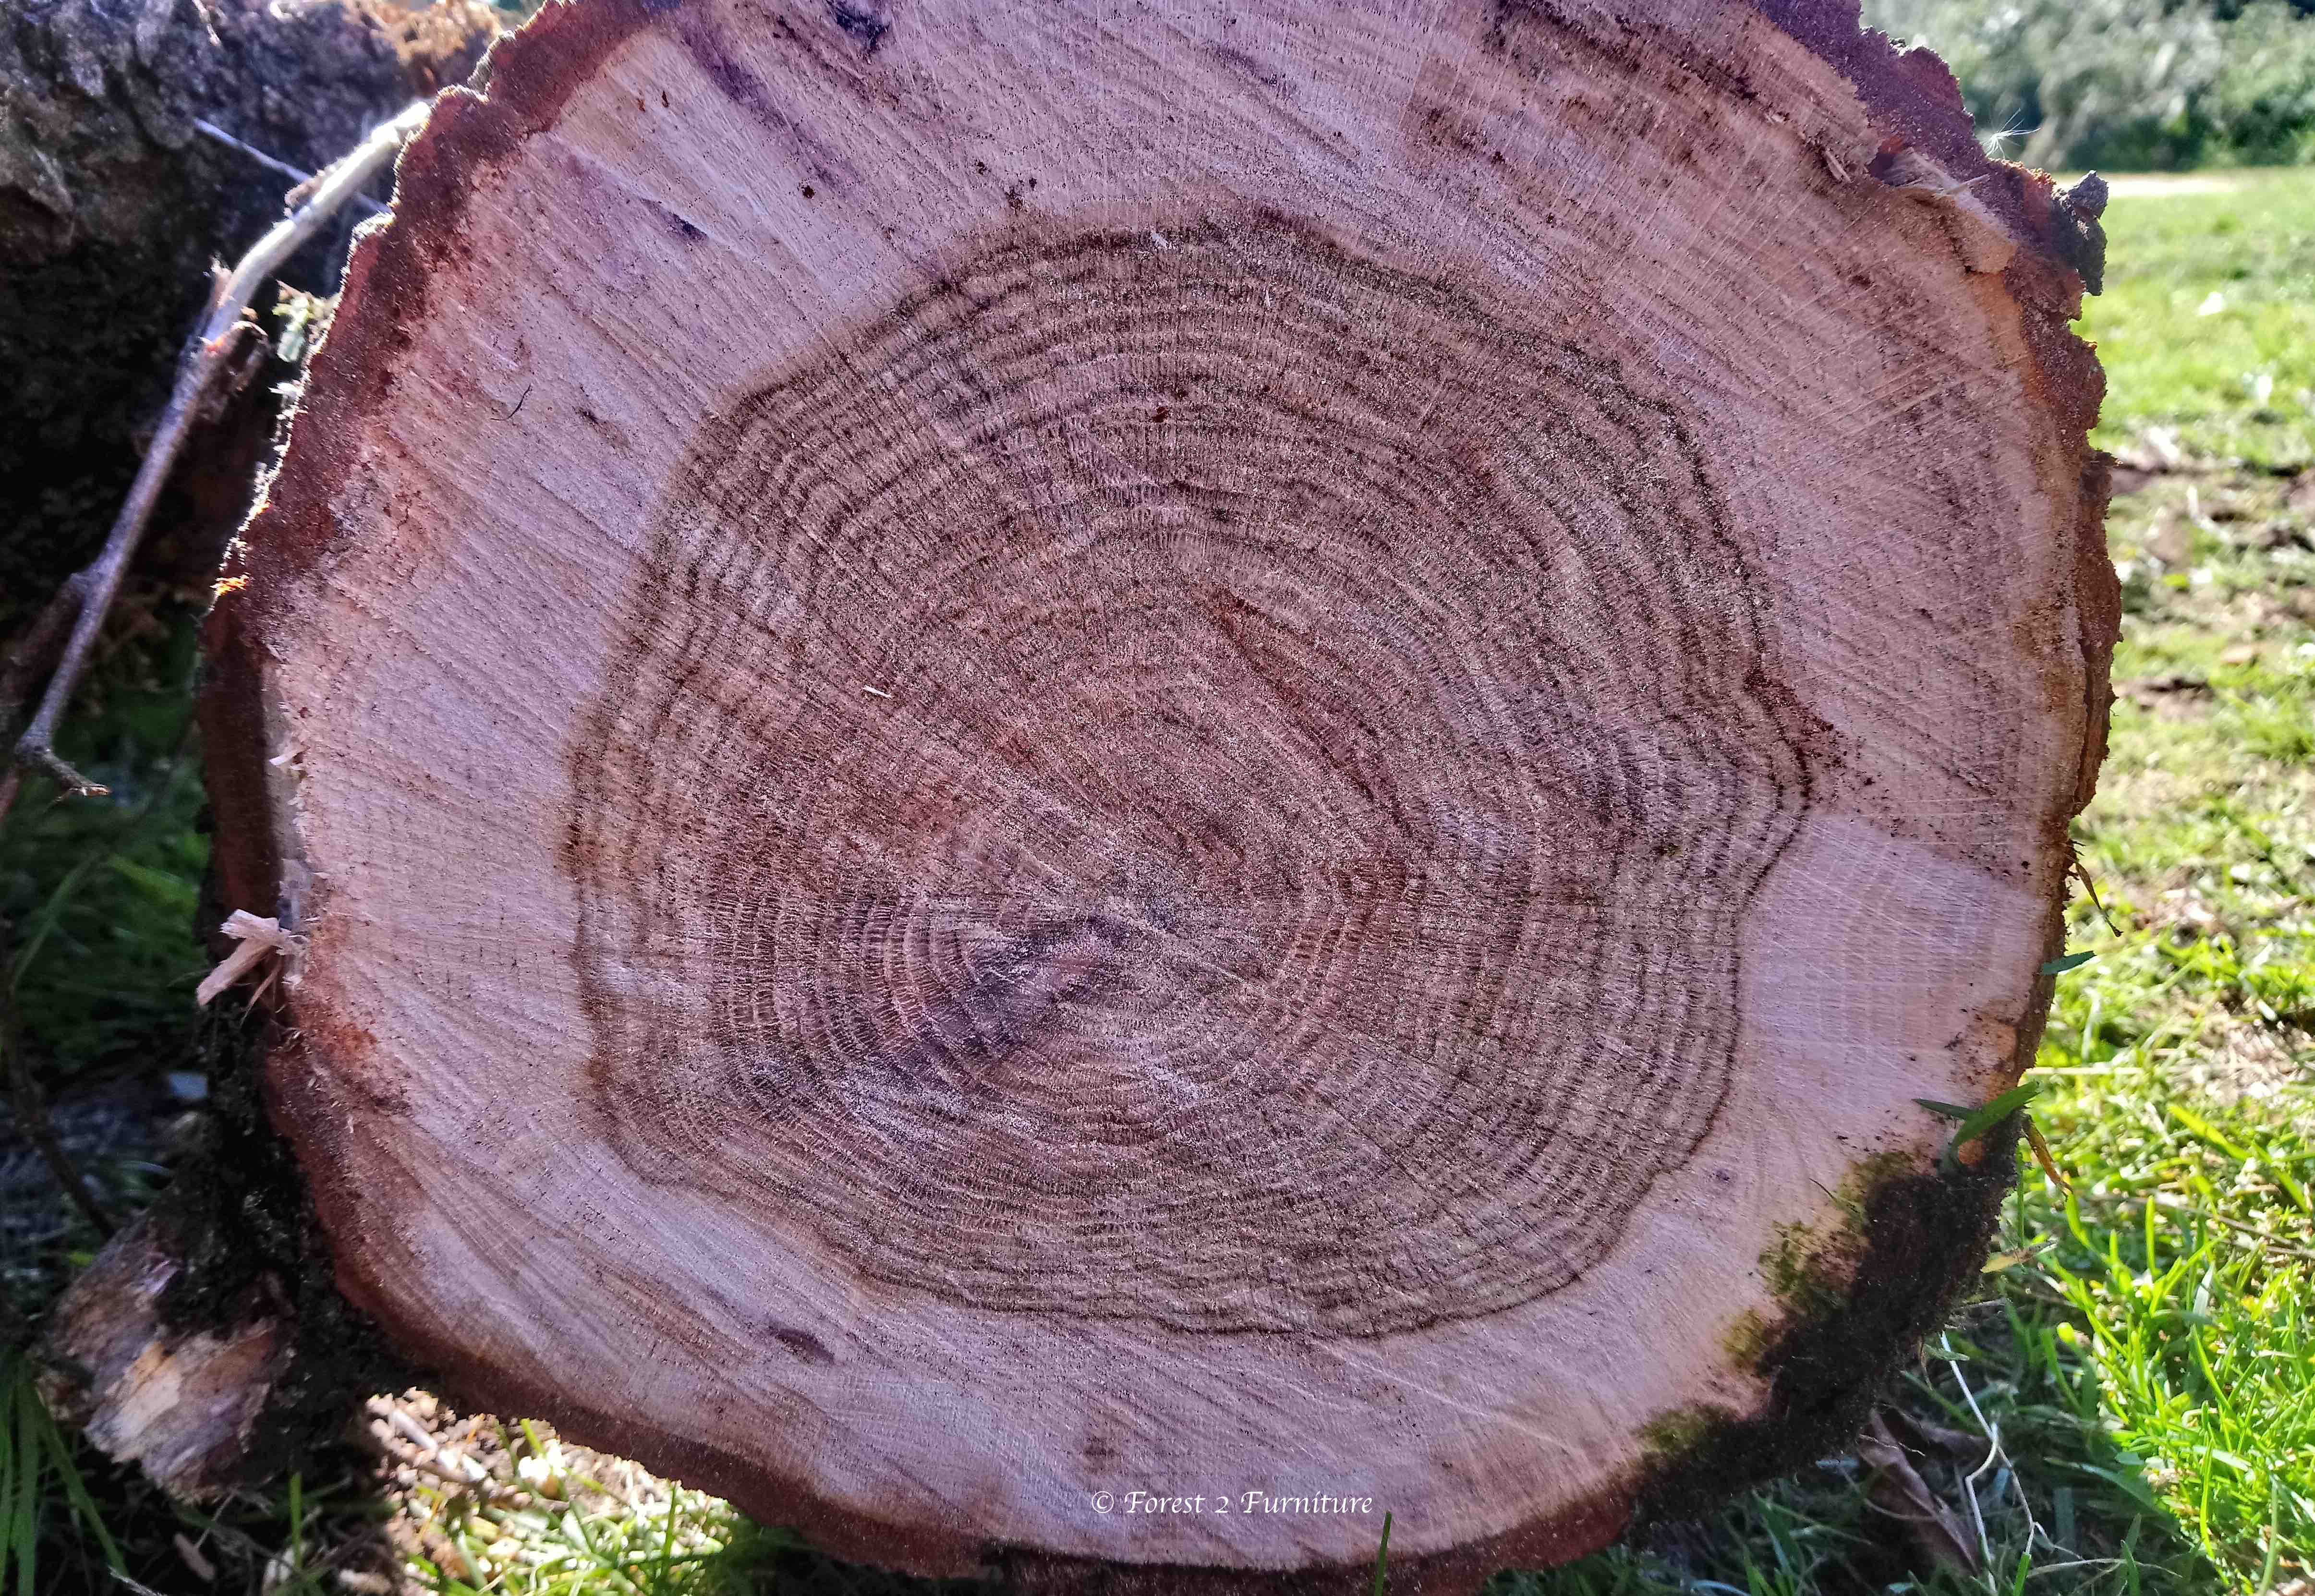 End grain of an English Oak tree